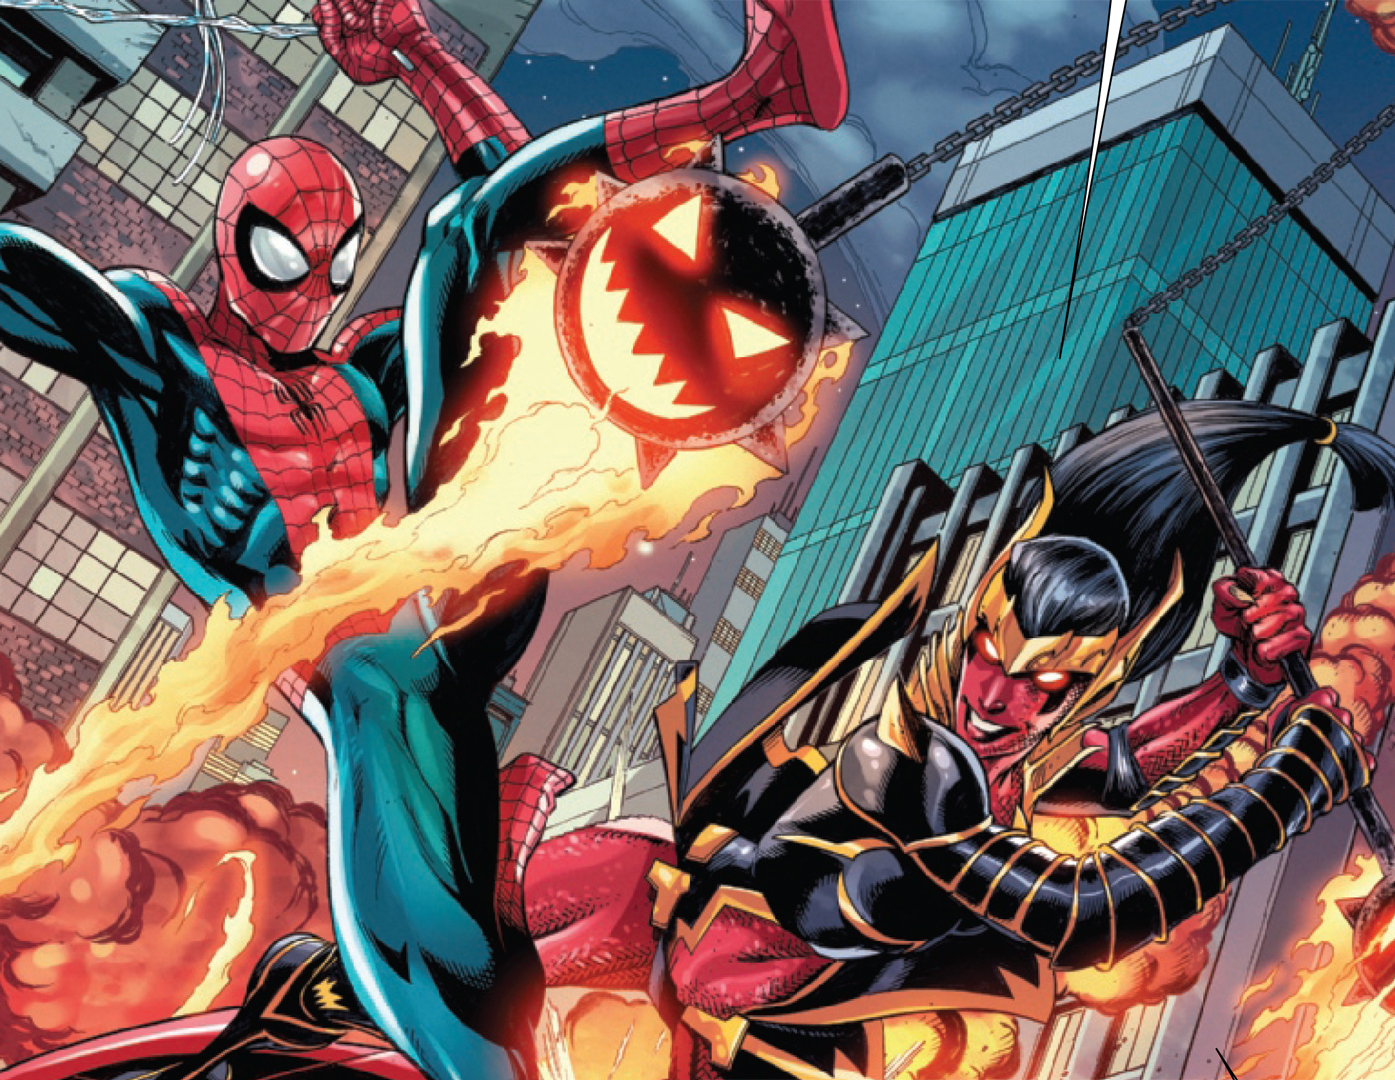 'Amazing Spider-Man' #90 is a triumphant return for Peter Parker